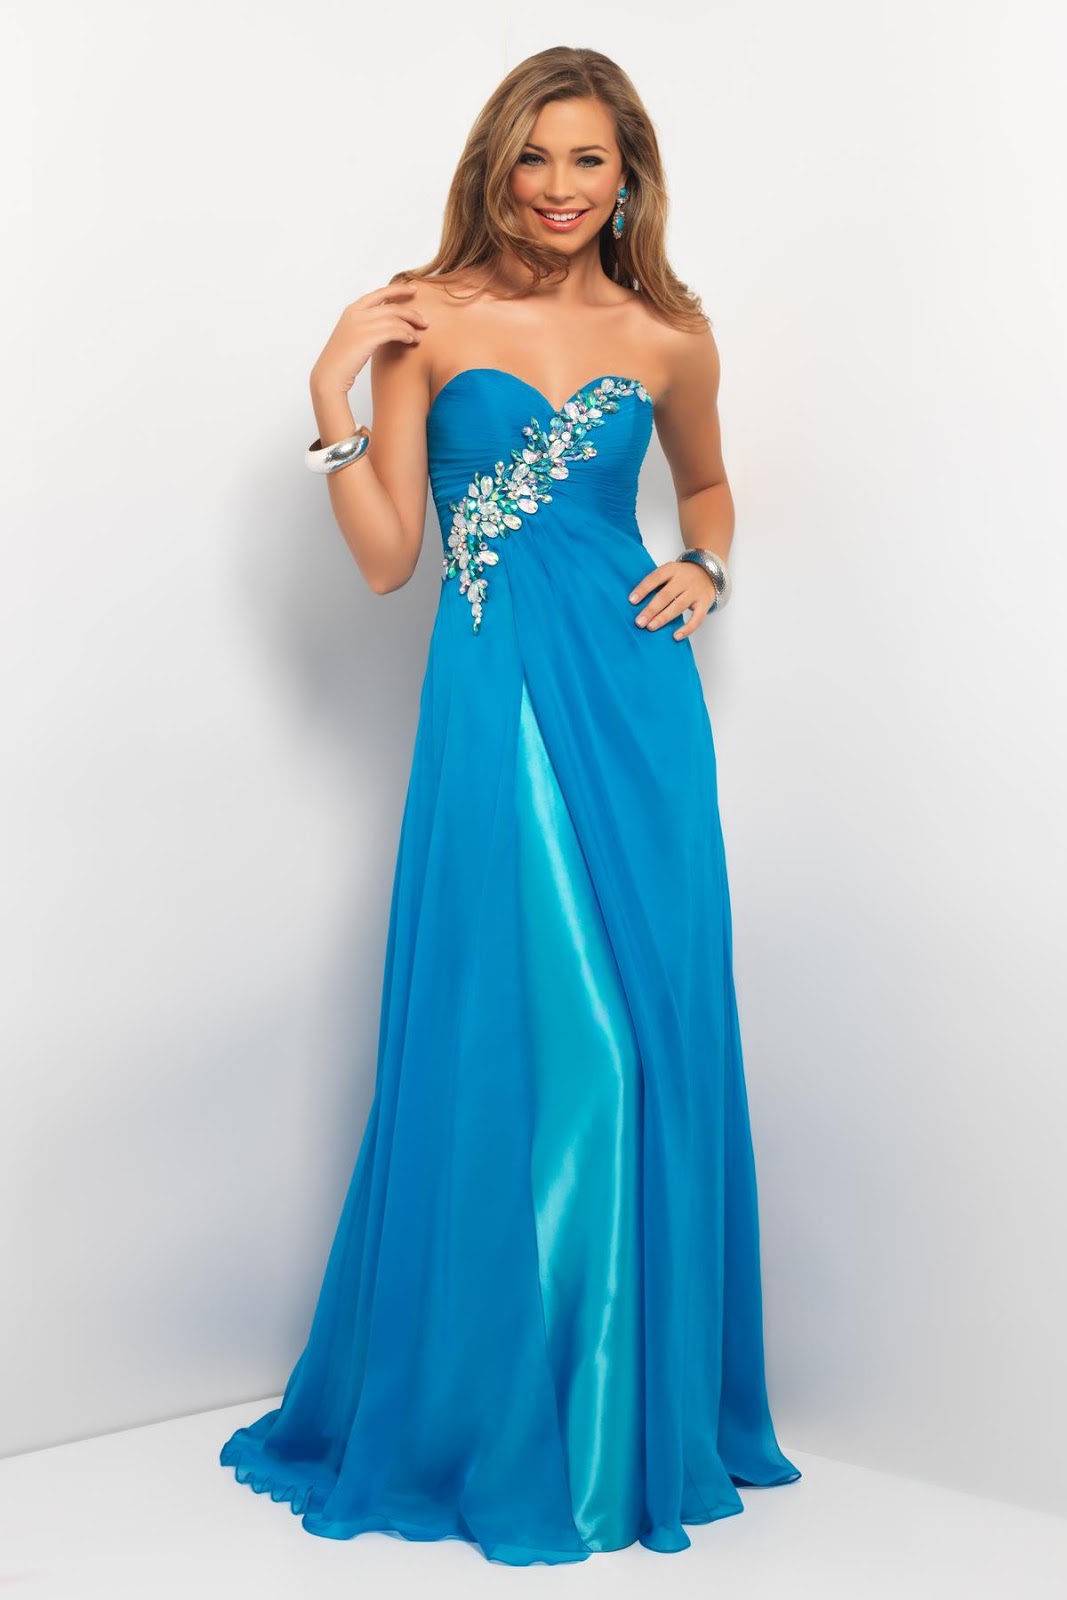 DressyBridal: Popular Blue Prom Dresses for 2013 Prom